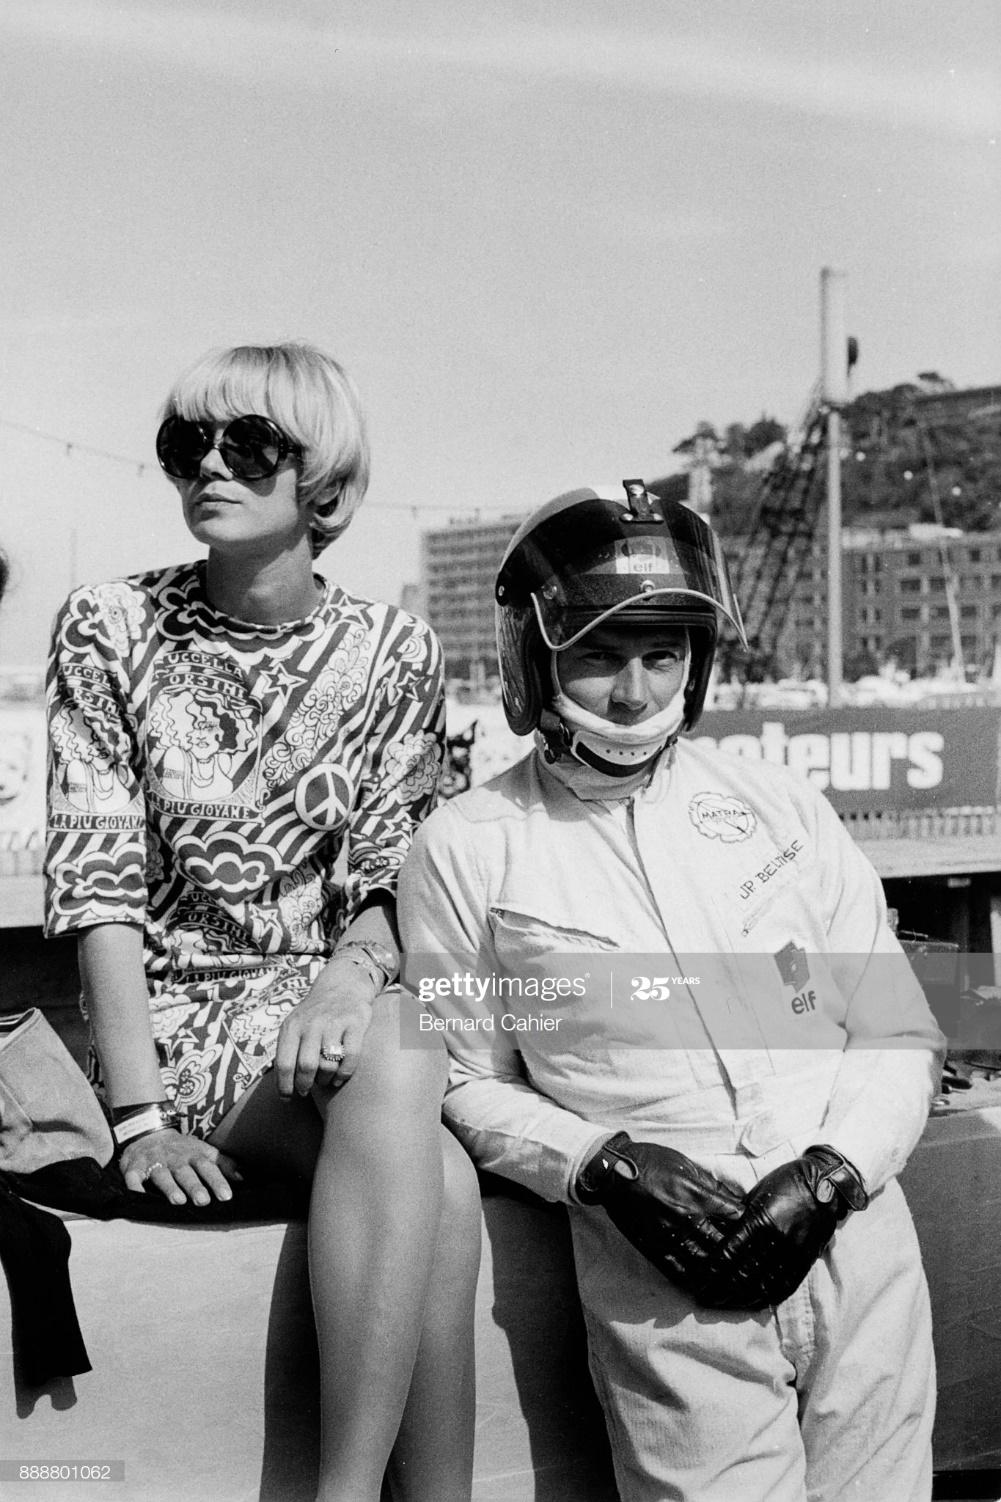 Jean Pierre and Jacqueline at Monaco GP.